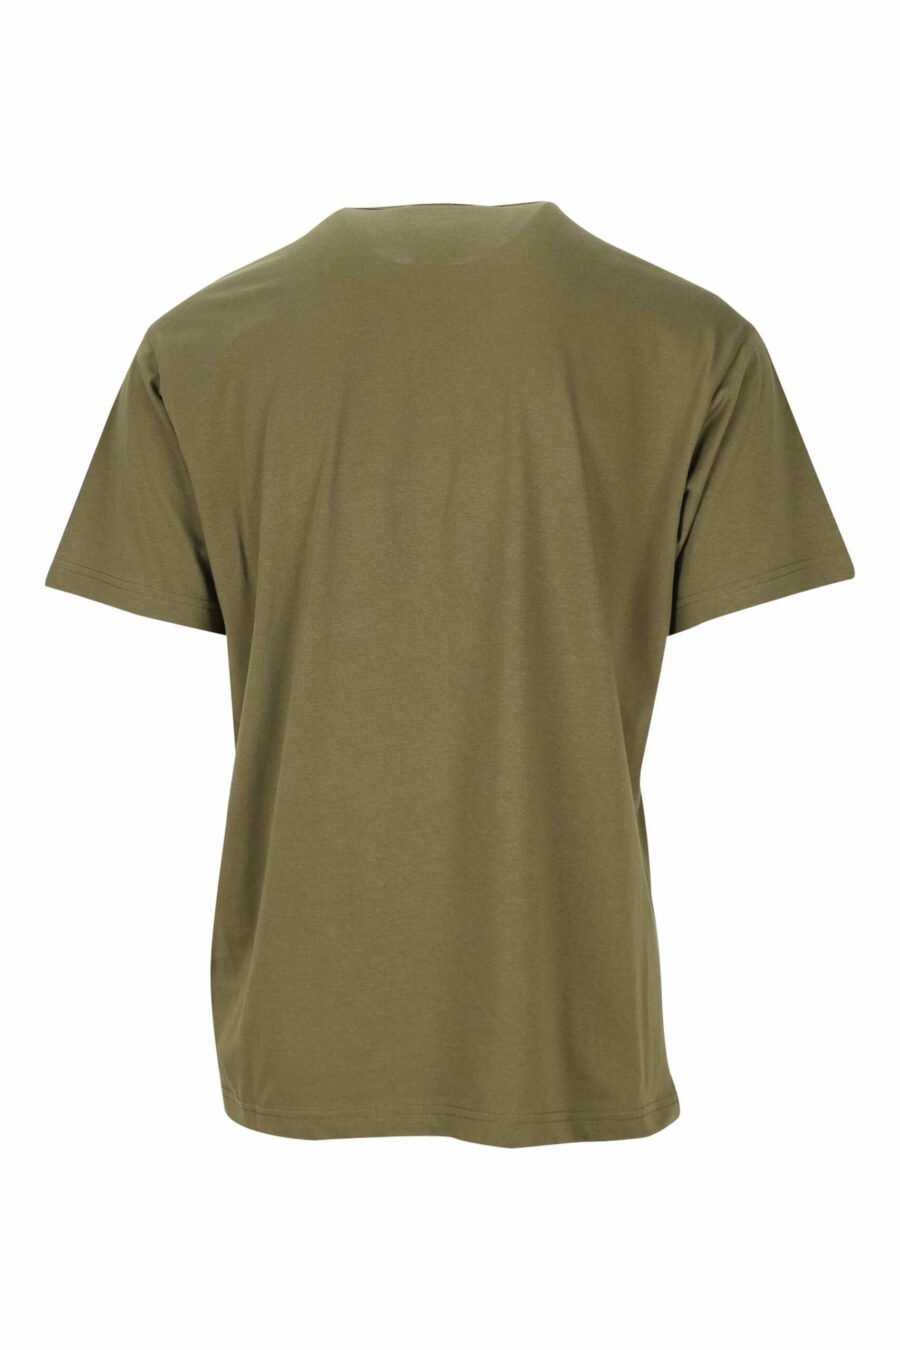 Camiseta verde militar con maxilogo clásico naranja - 8052019468090 1 scaled